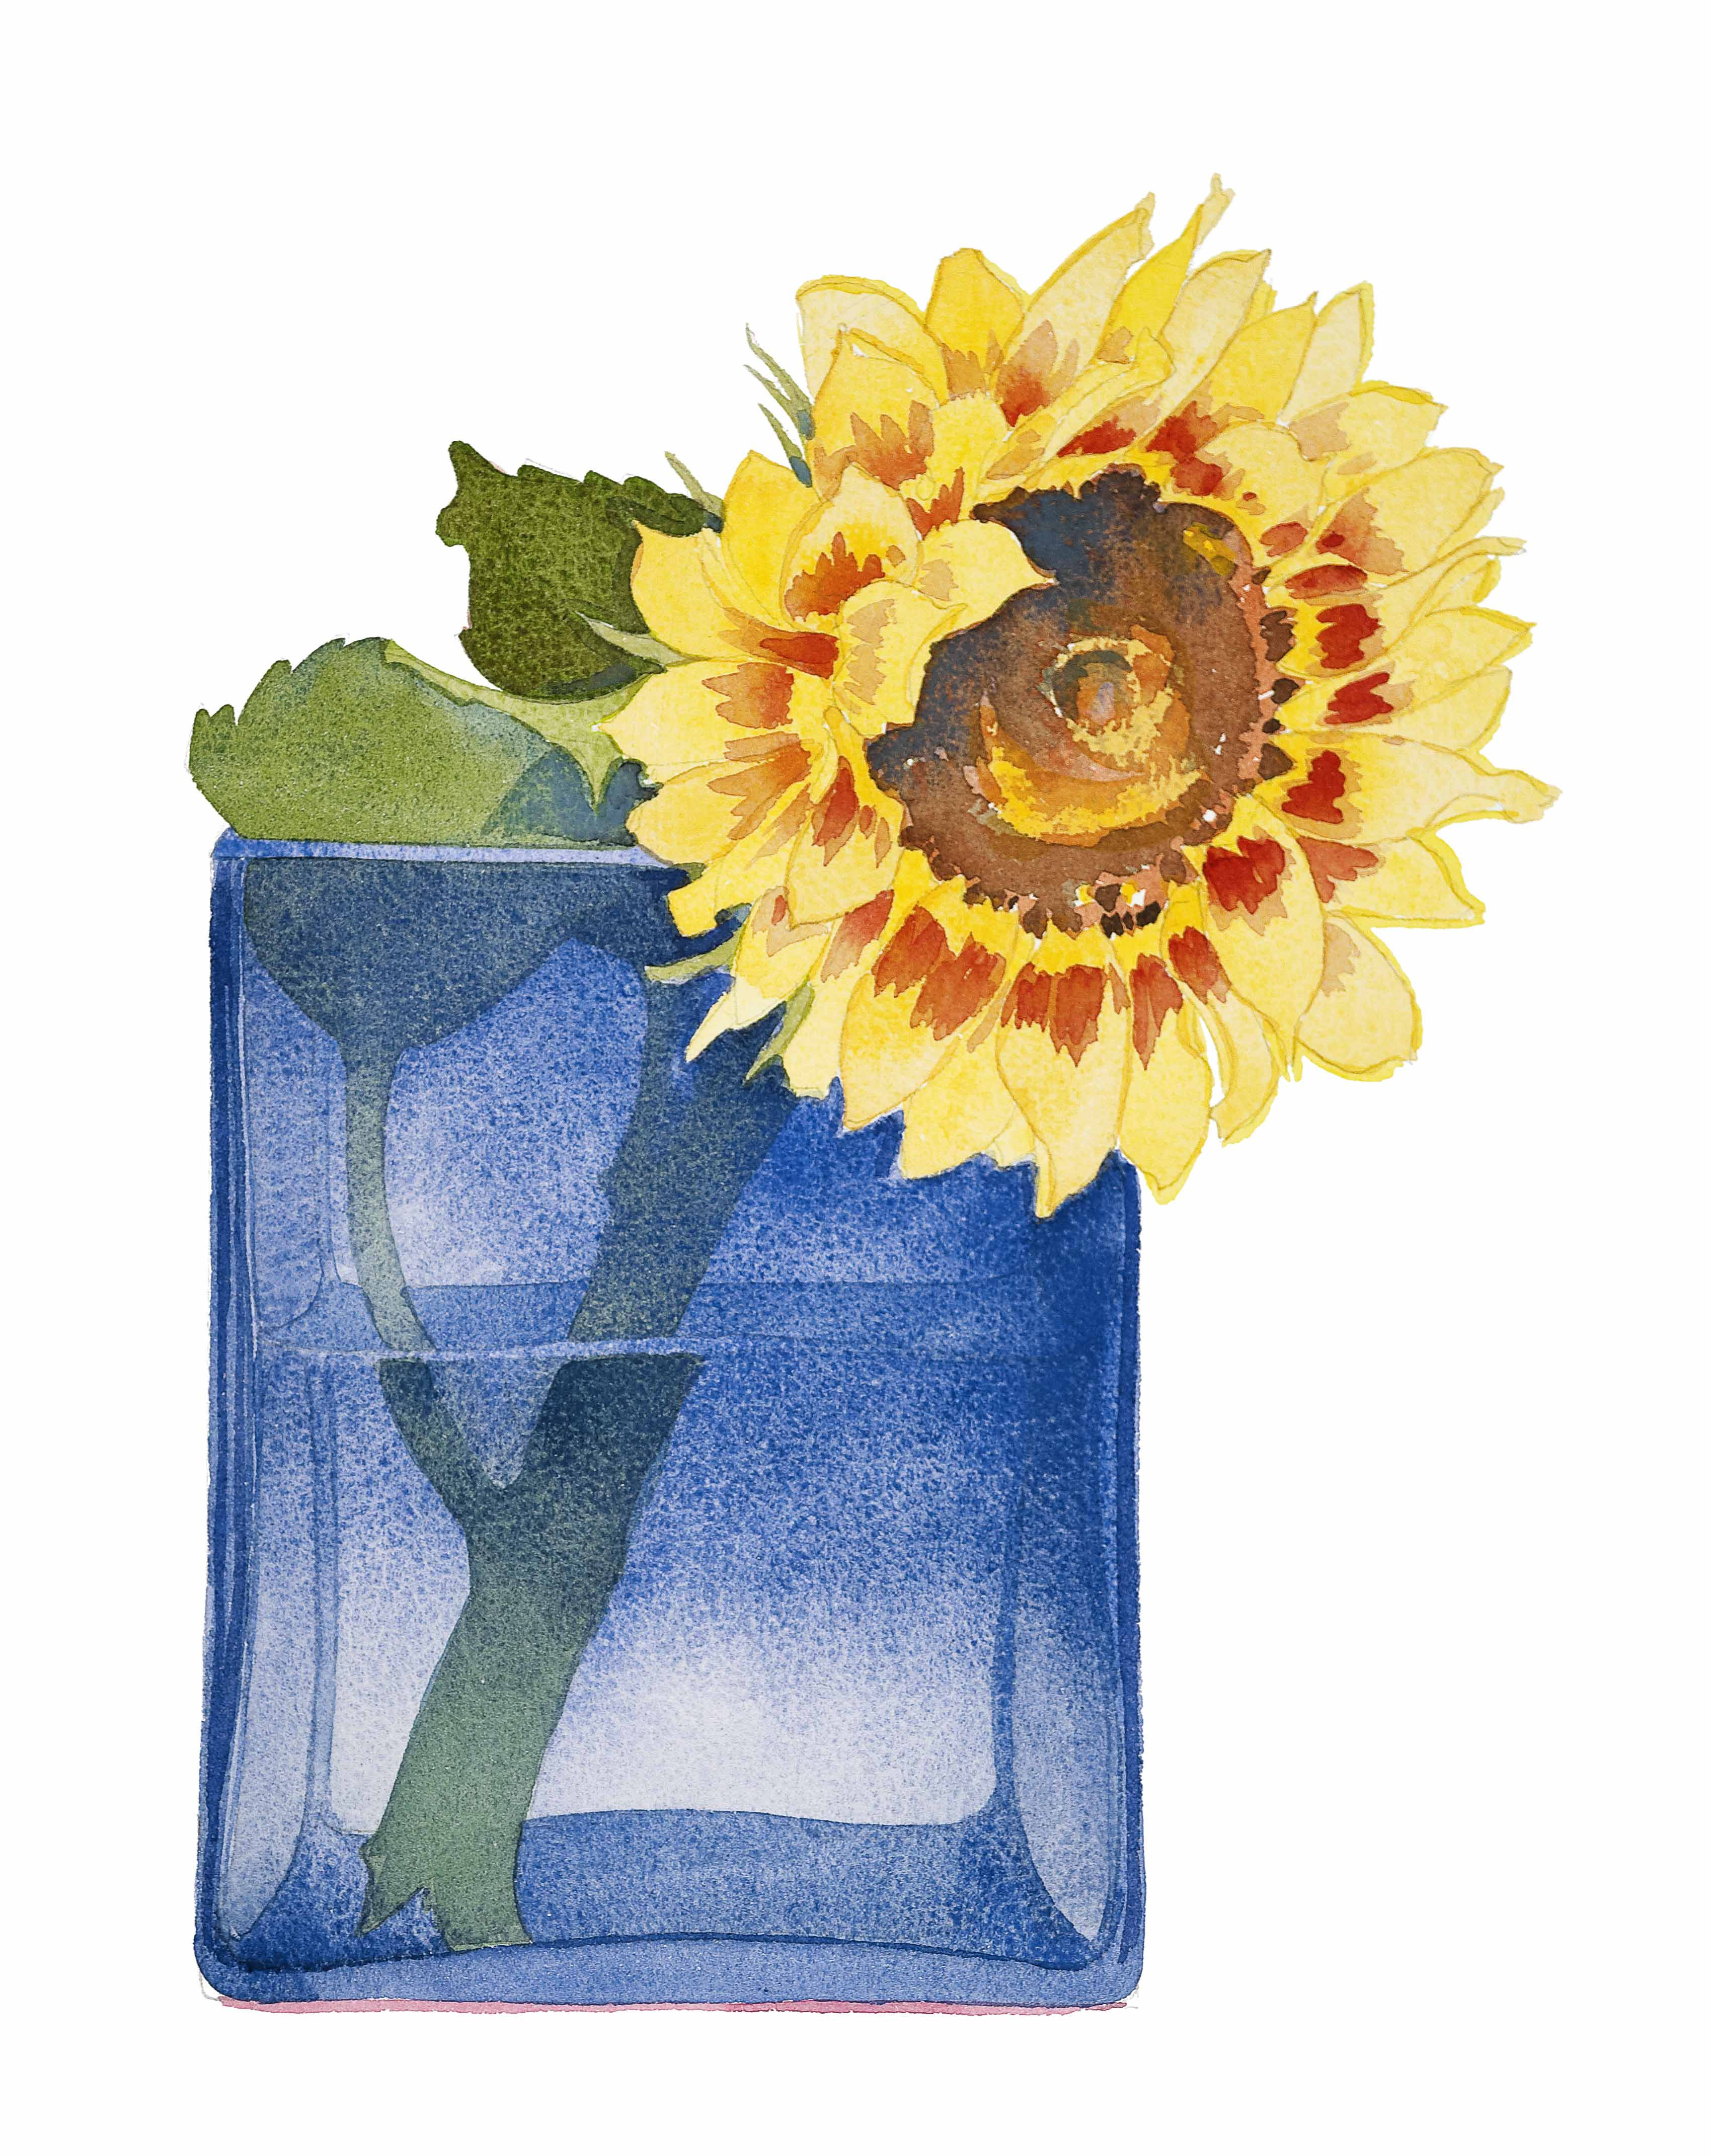 Sunflower in a blue vase